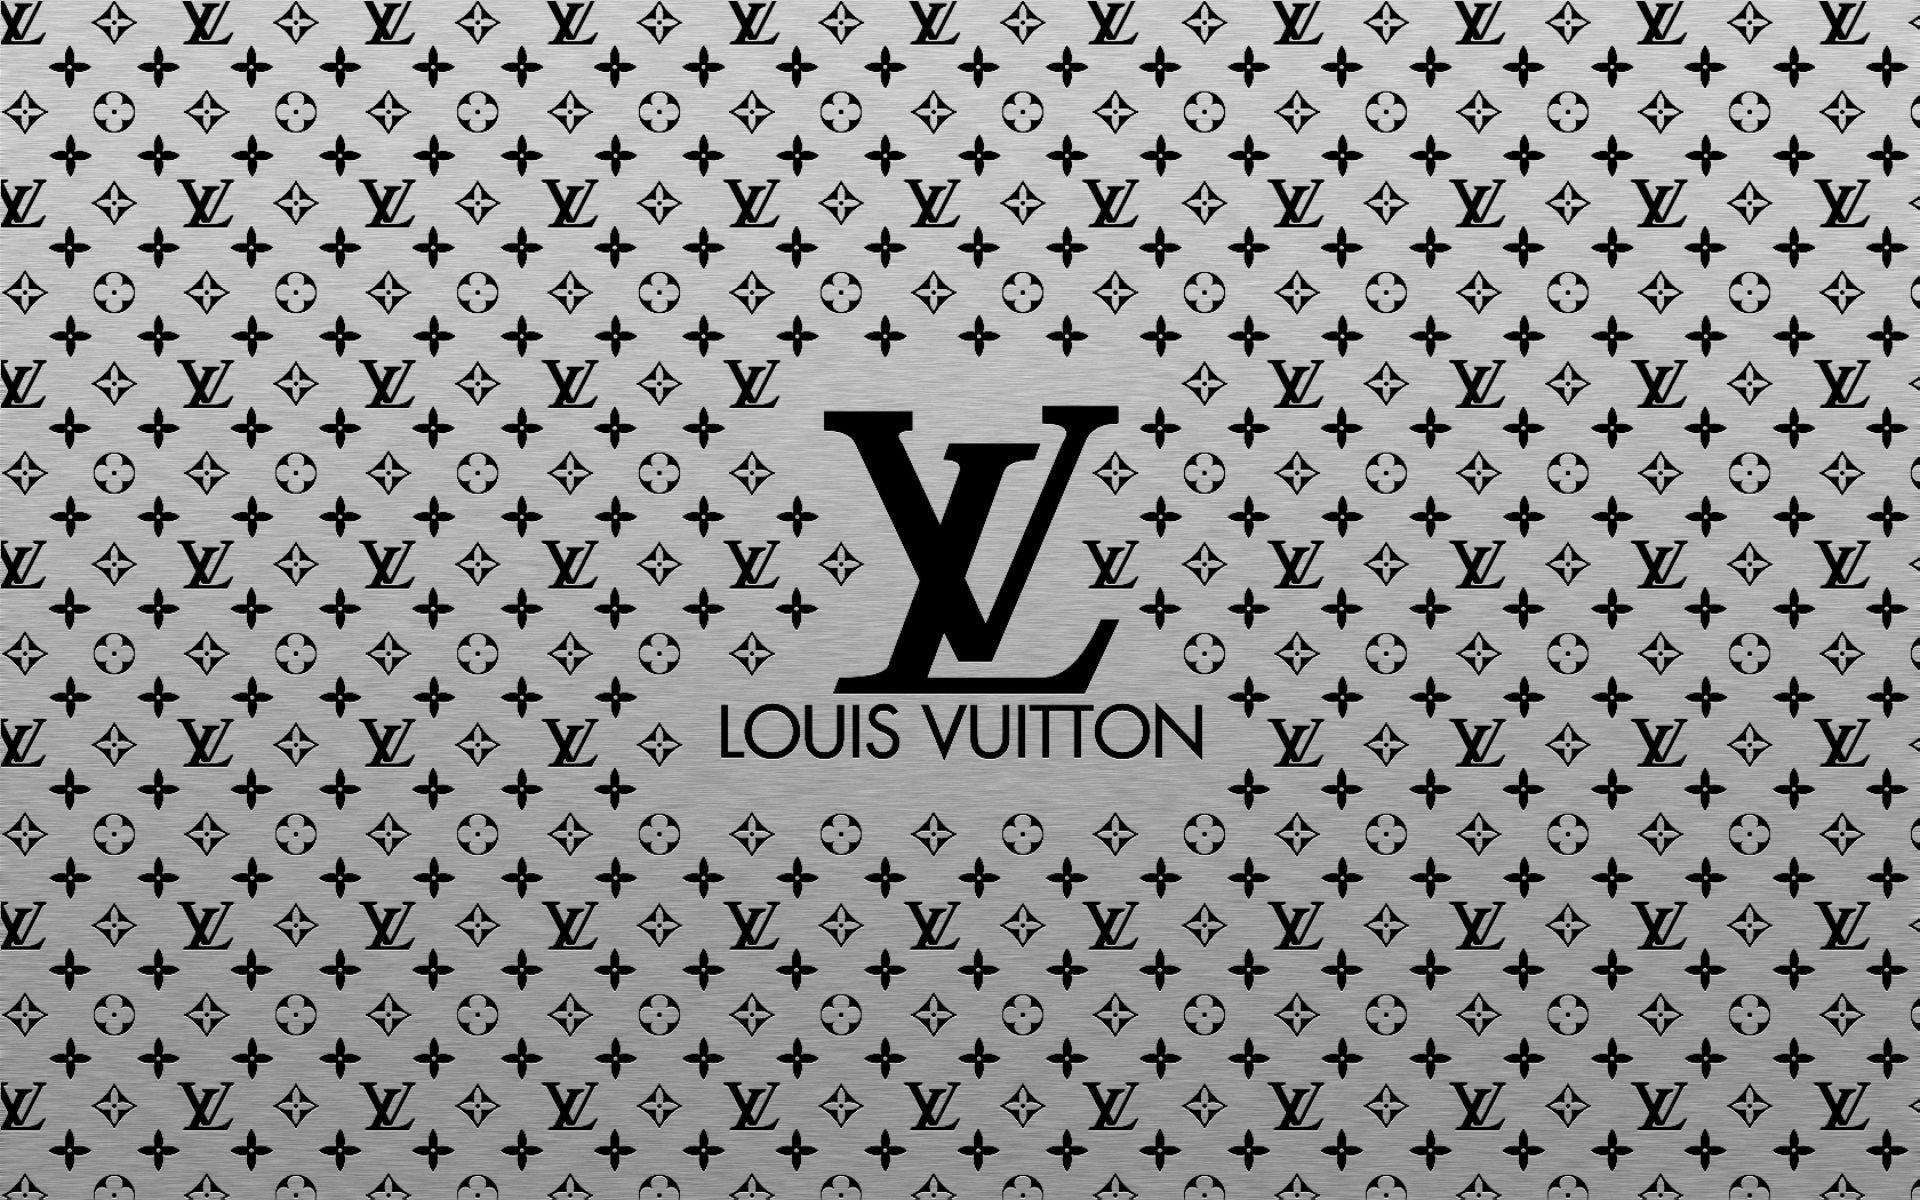 Stream Flor Gucci Prada  Louis Vuitton by Pivetão  Listen online for  free on SoundCloud